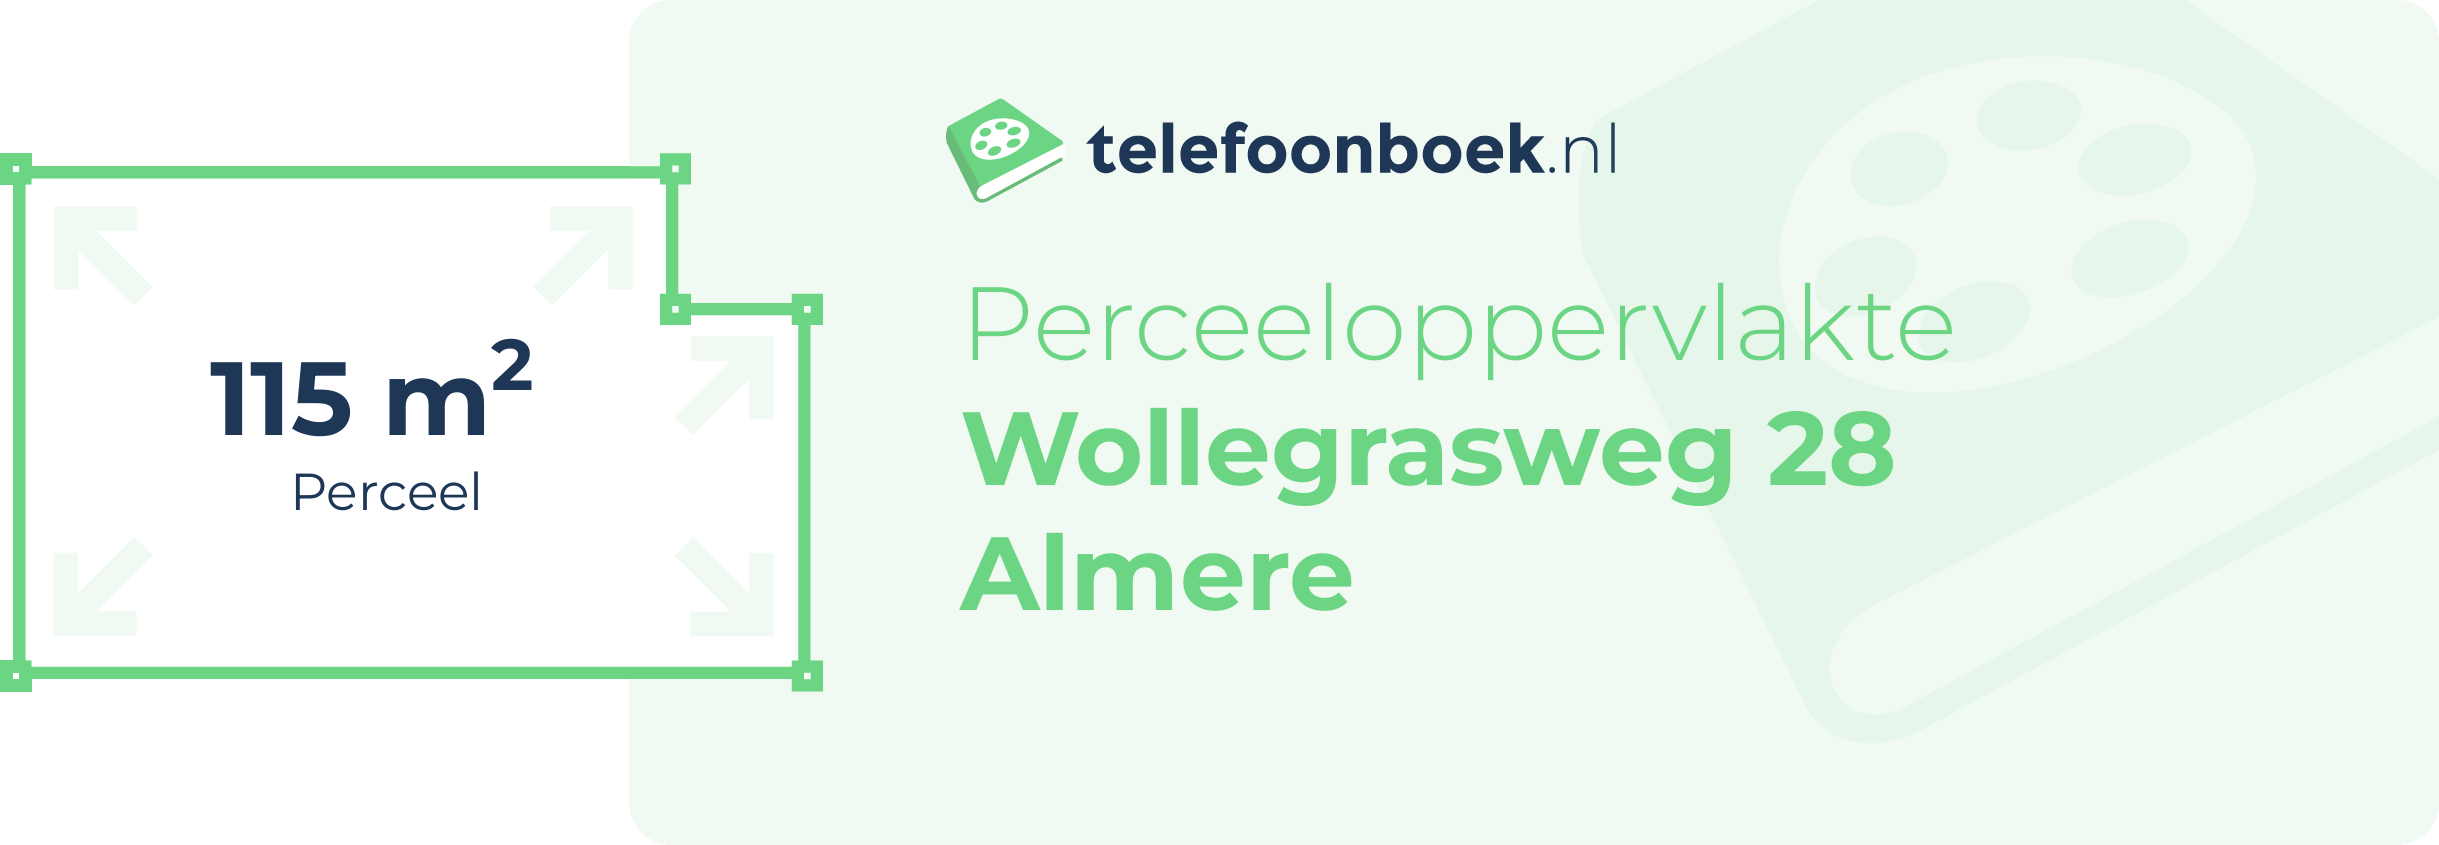 Perceeloppervlakte Wollegrasweg 28 Almere